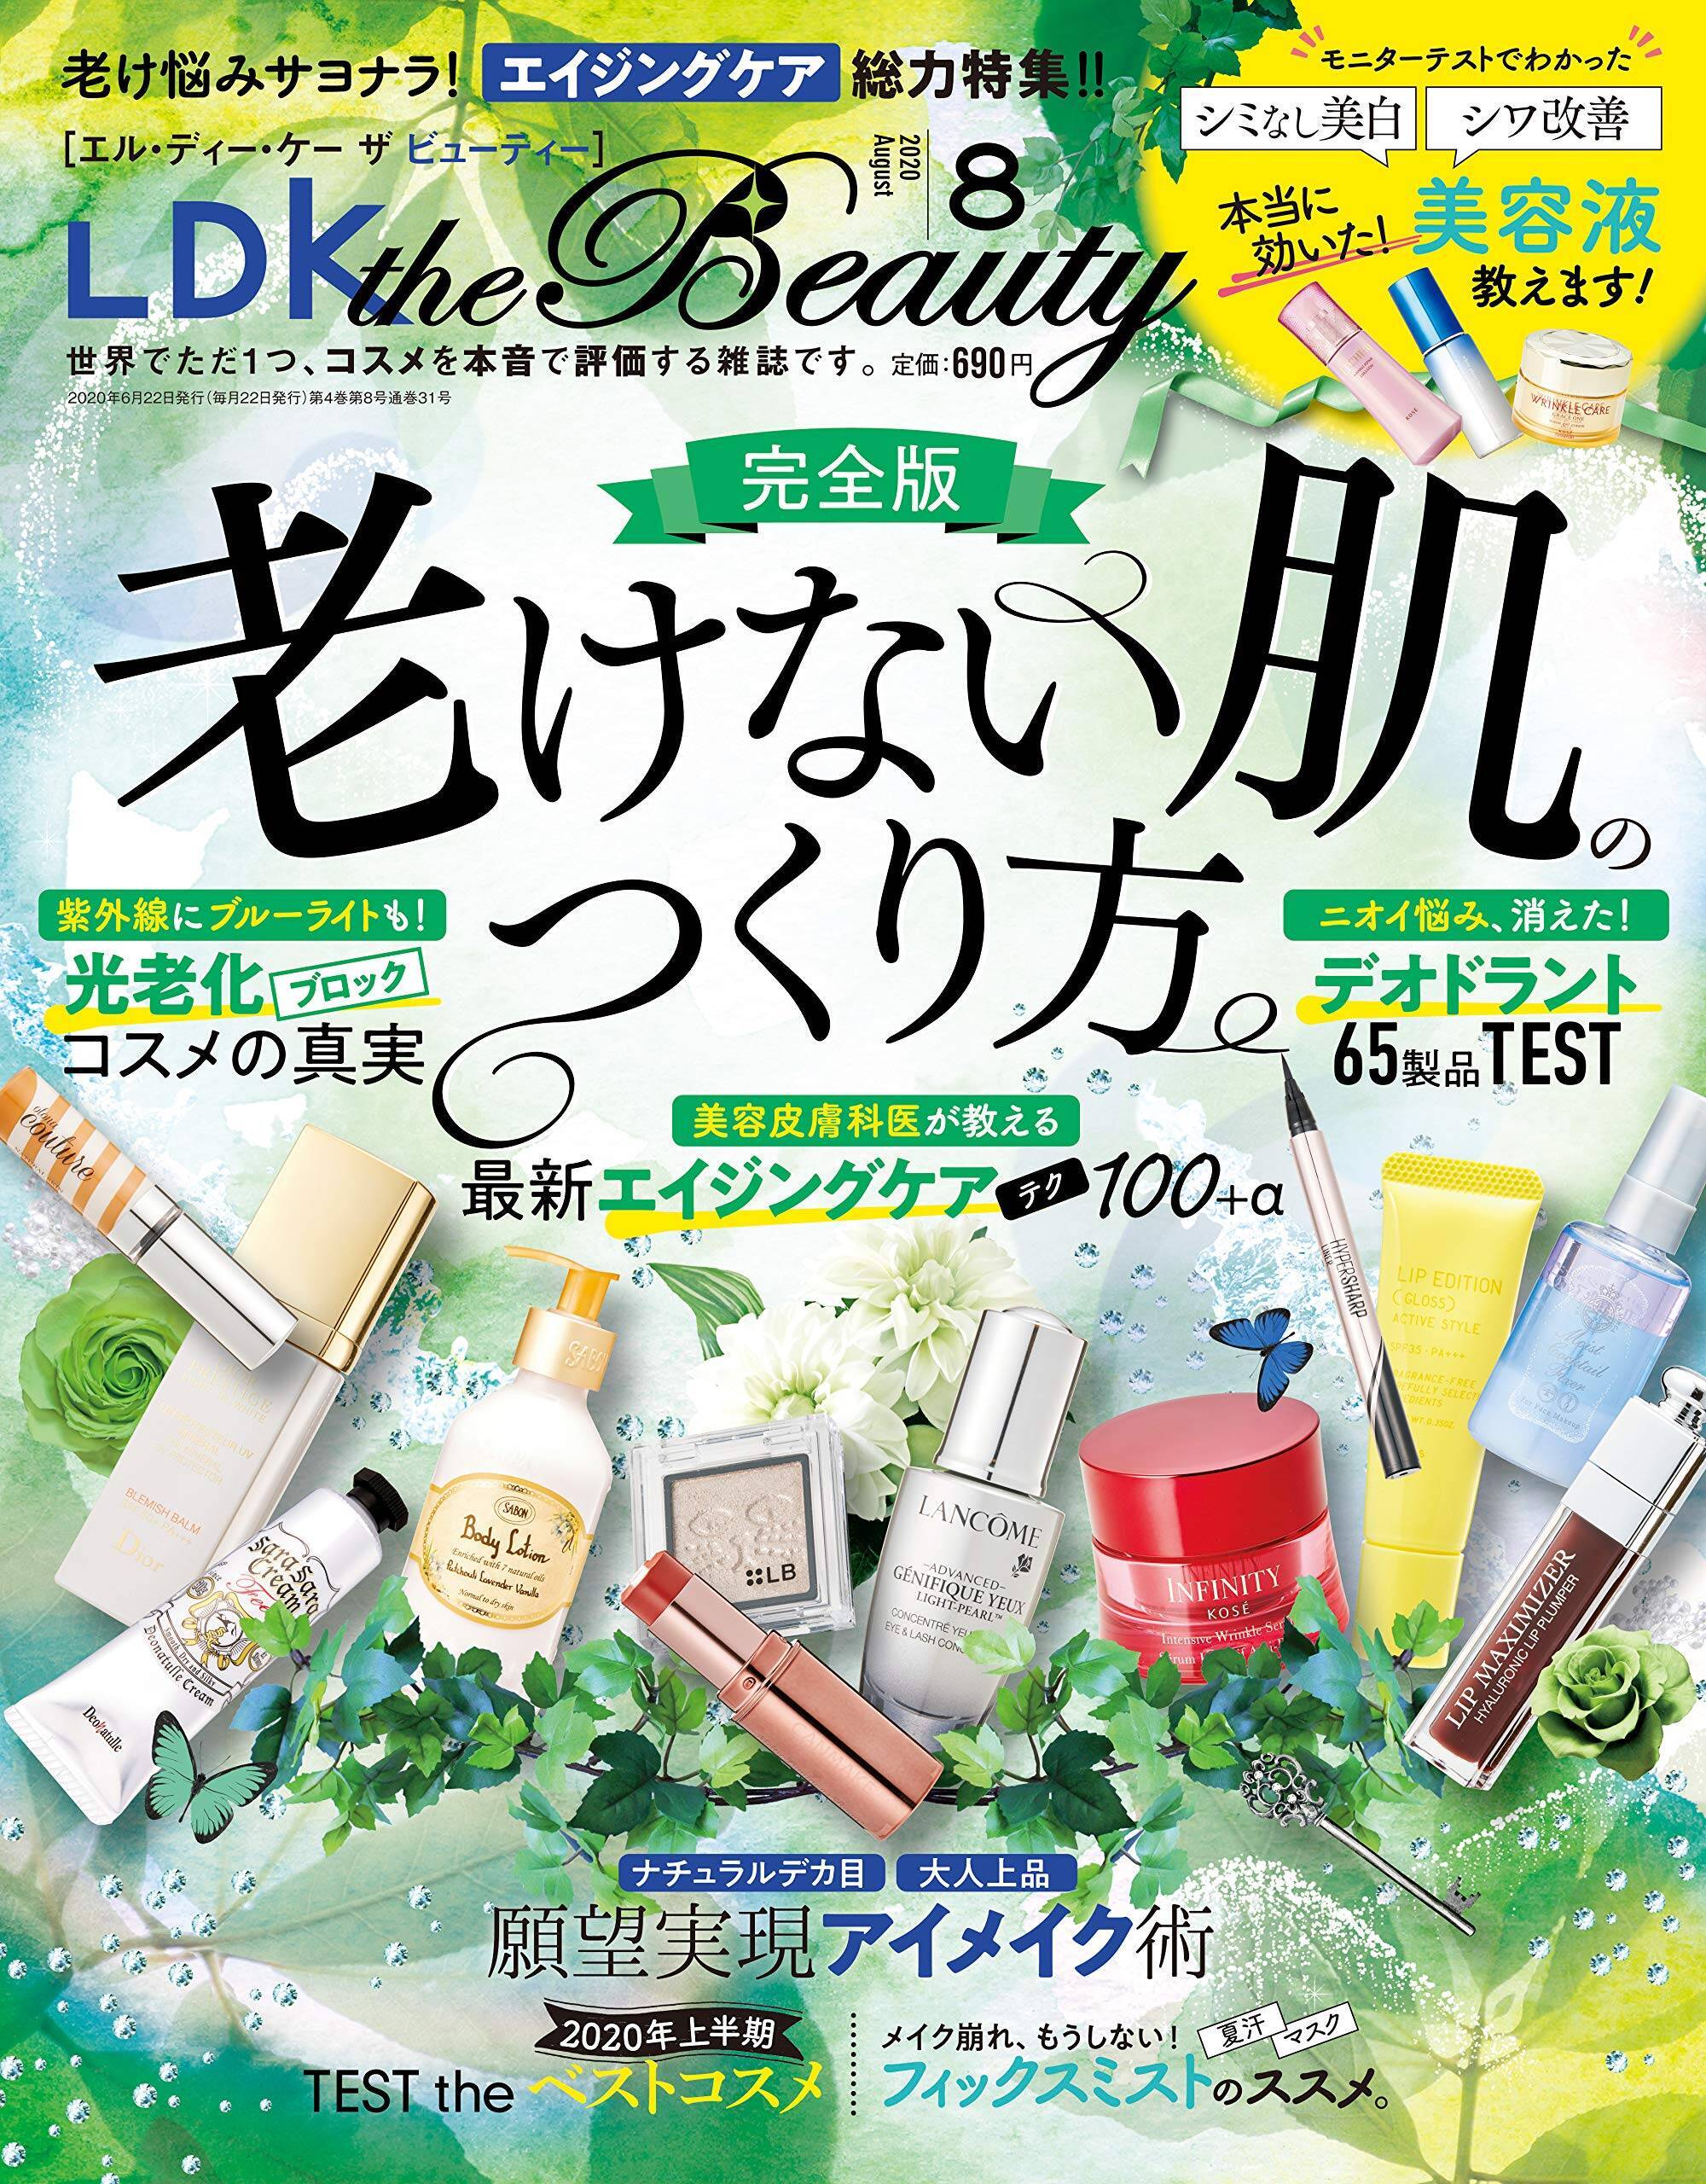 Ldk The Beauty最新号 老けない肌のつくり方 などを特集 年6月30日 エキサイトニュース